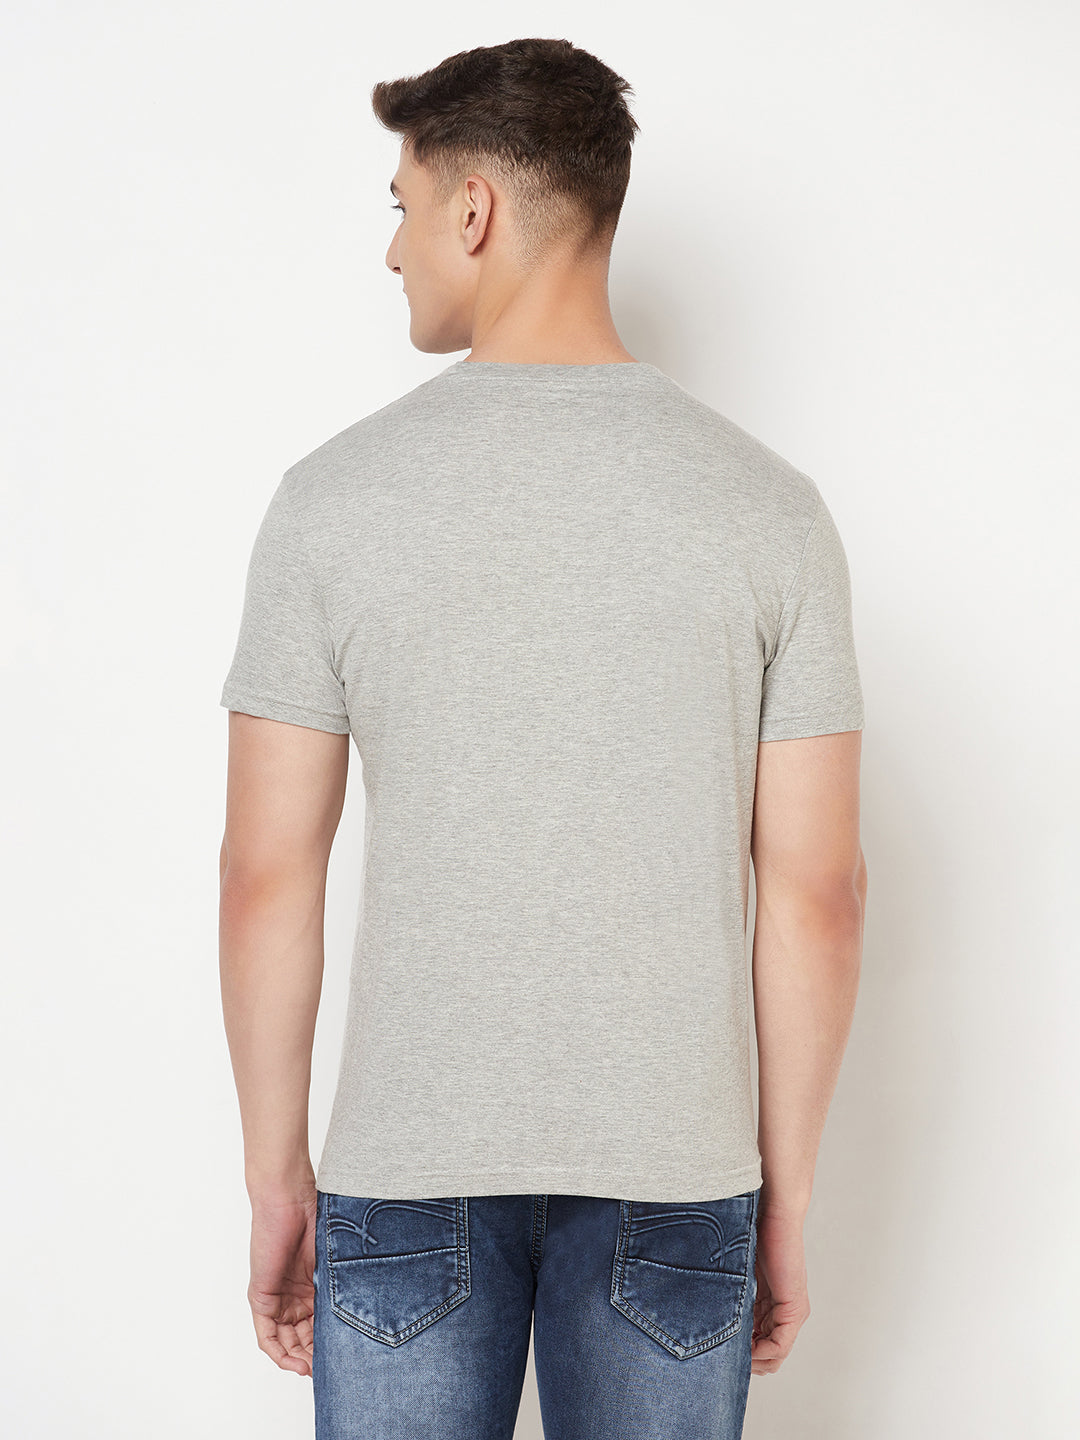 Premium Cotton Tshirts  (Pack of 2- White,Grey)